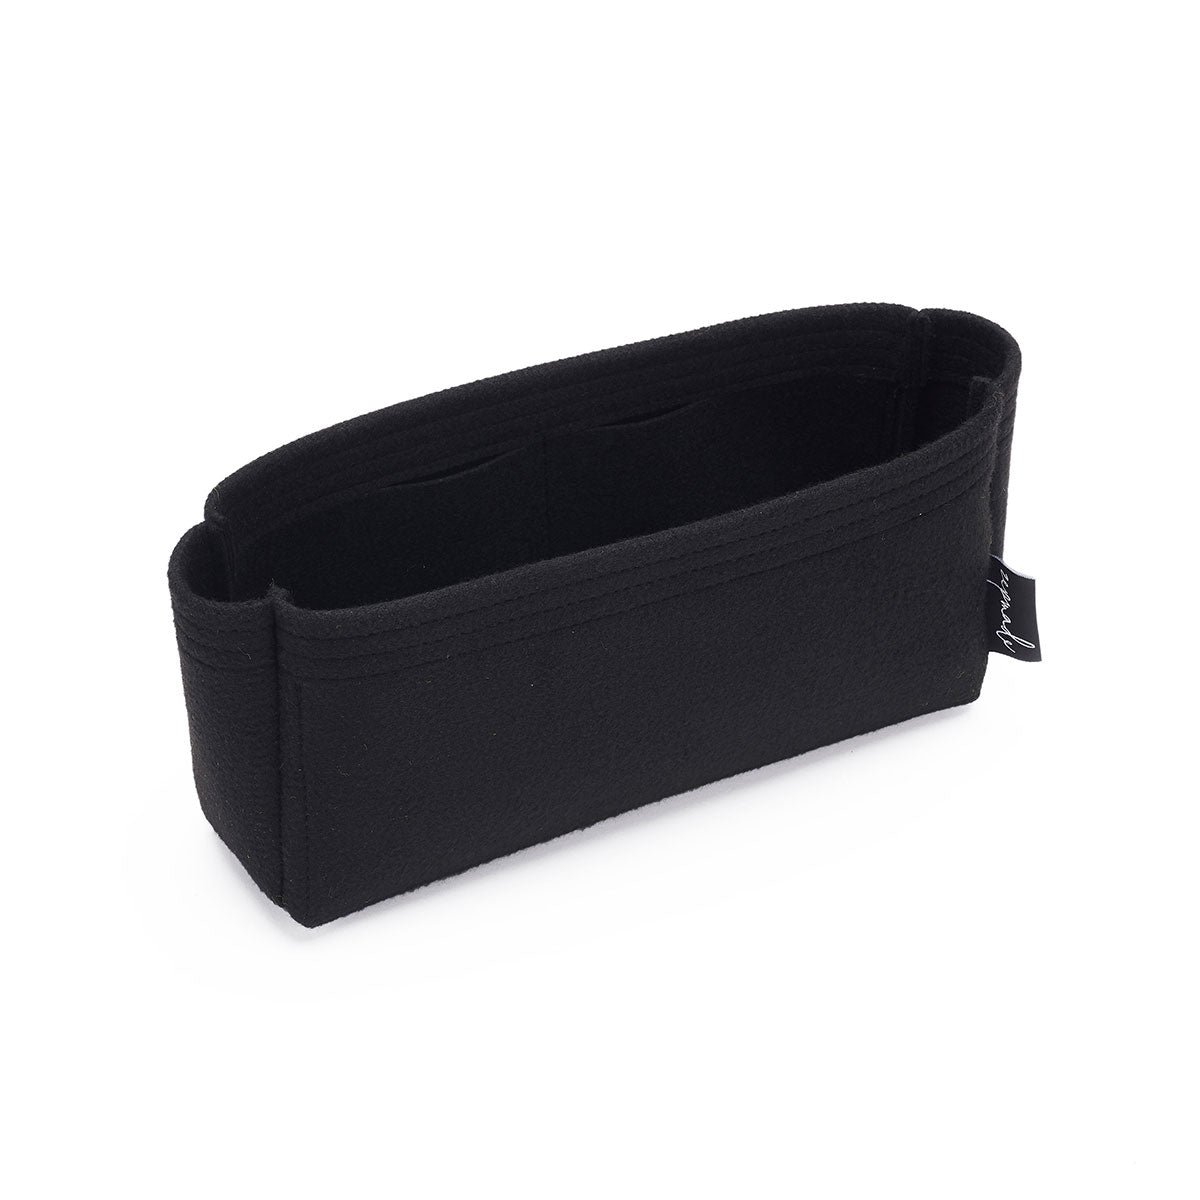 Purse Organizer Insert for Chanel 19 Large Bag Organizer with Side Zipper Pocket Black 1016 27 * 8 * 15cm